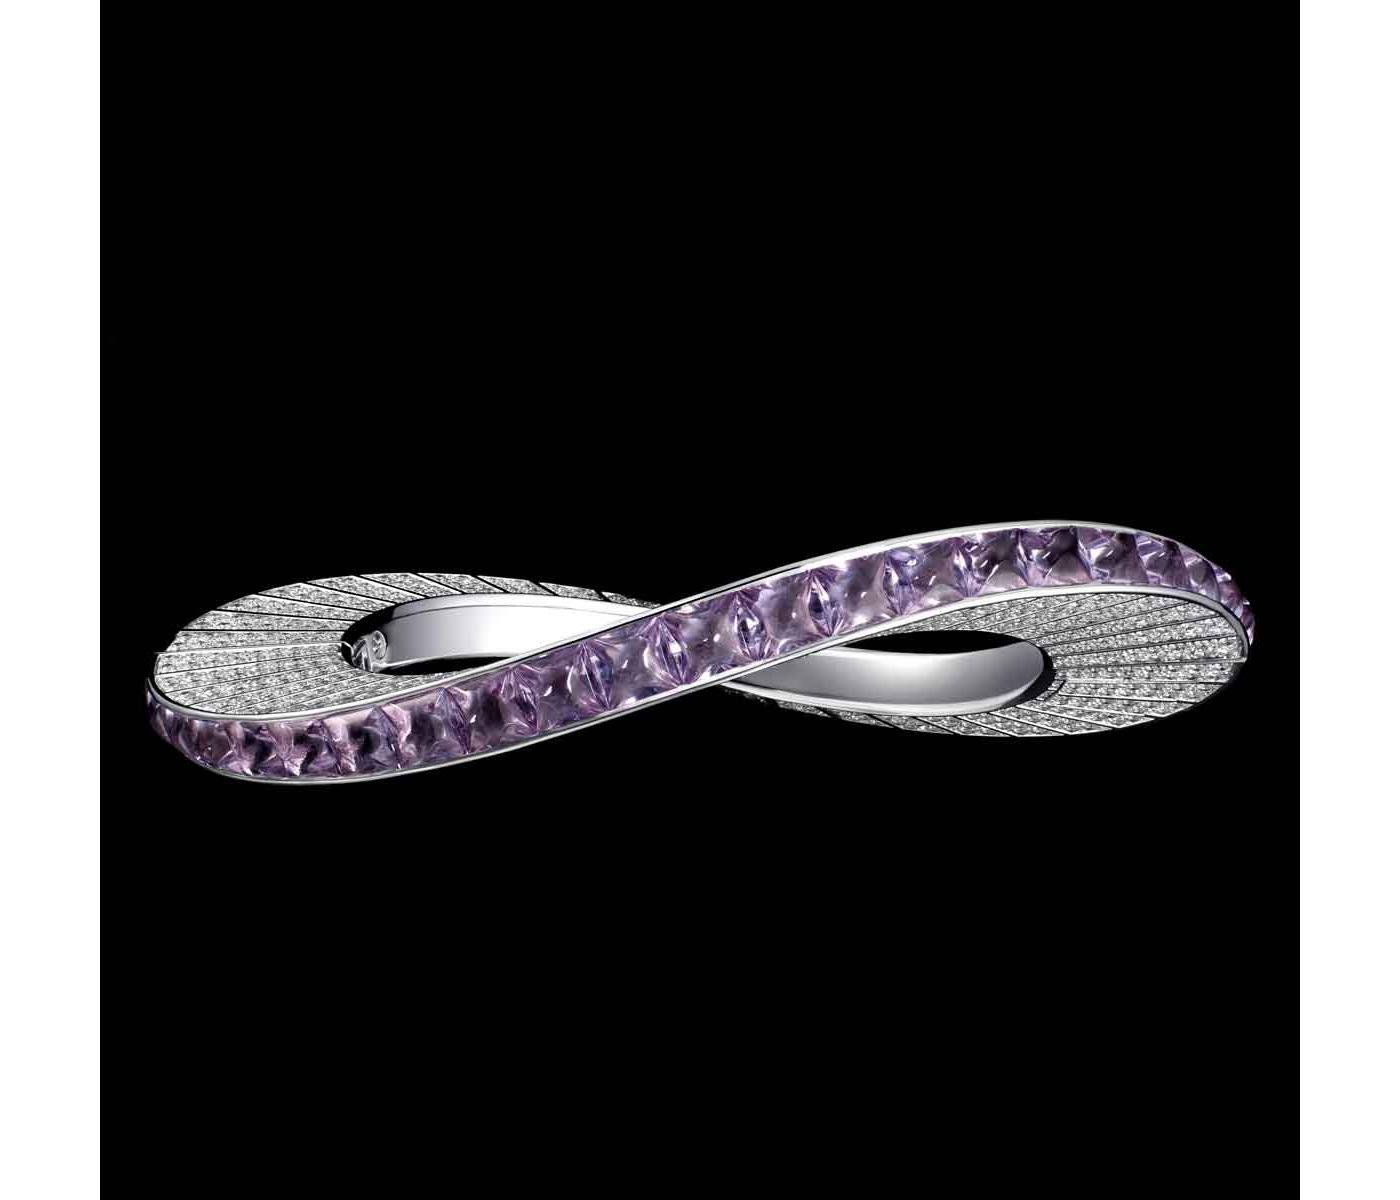 Bracelet by Cartier